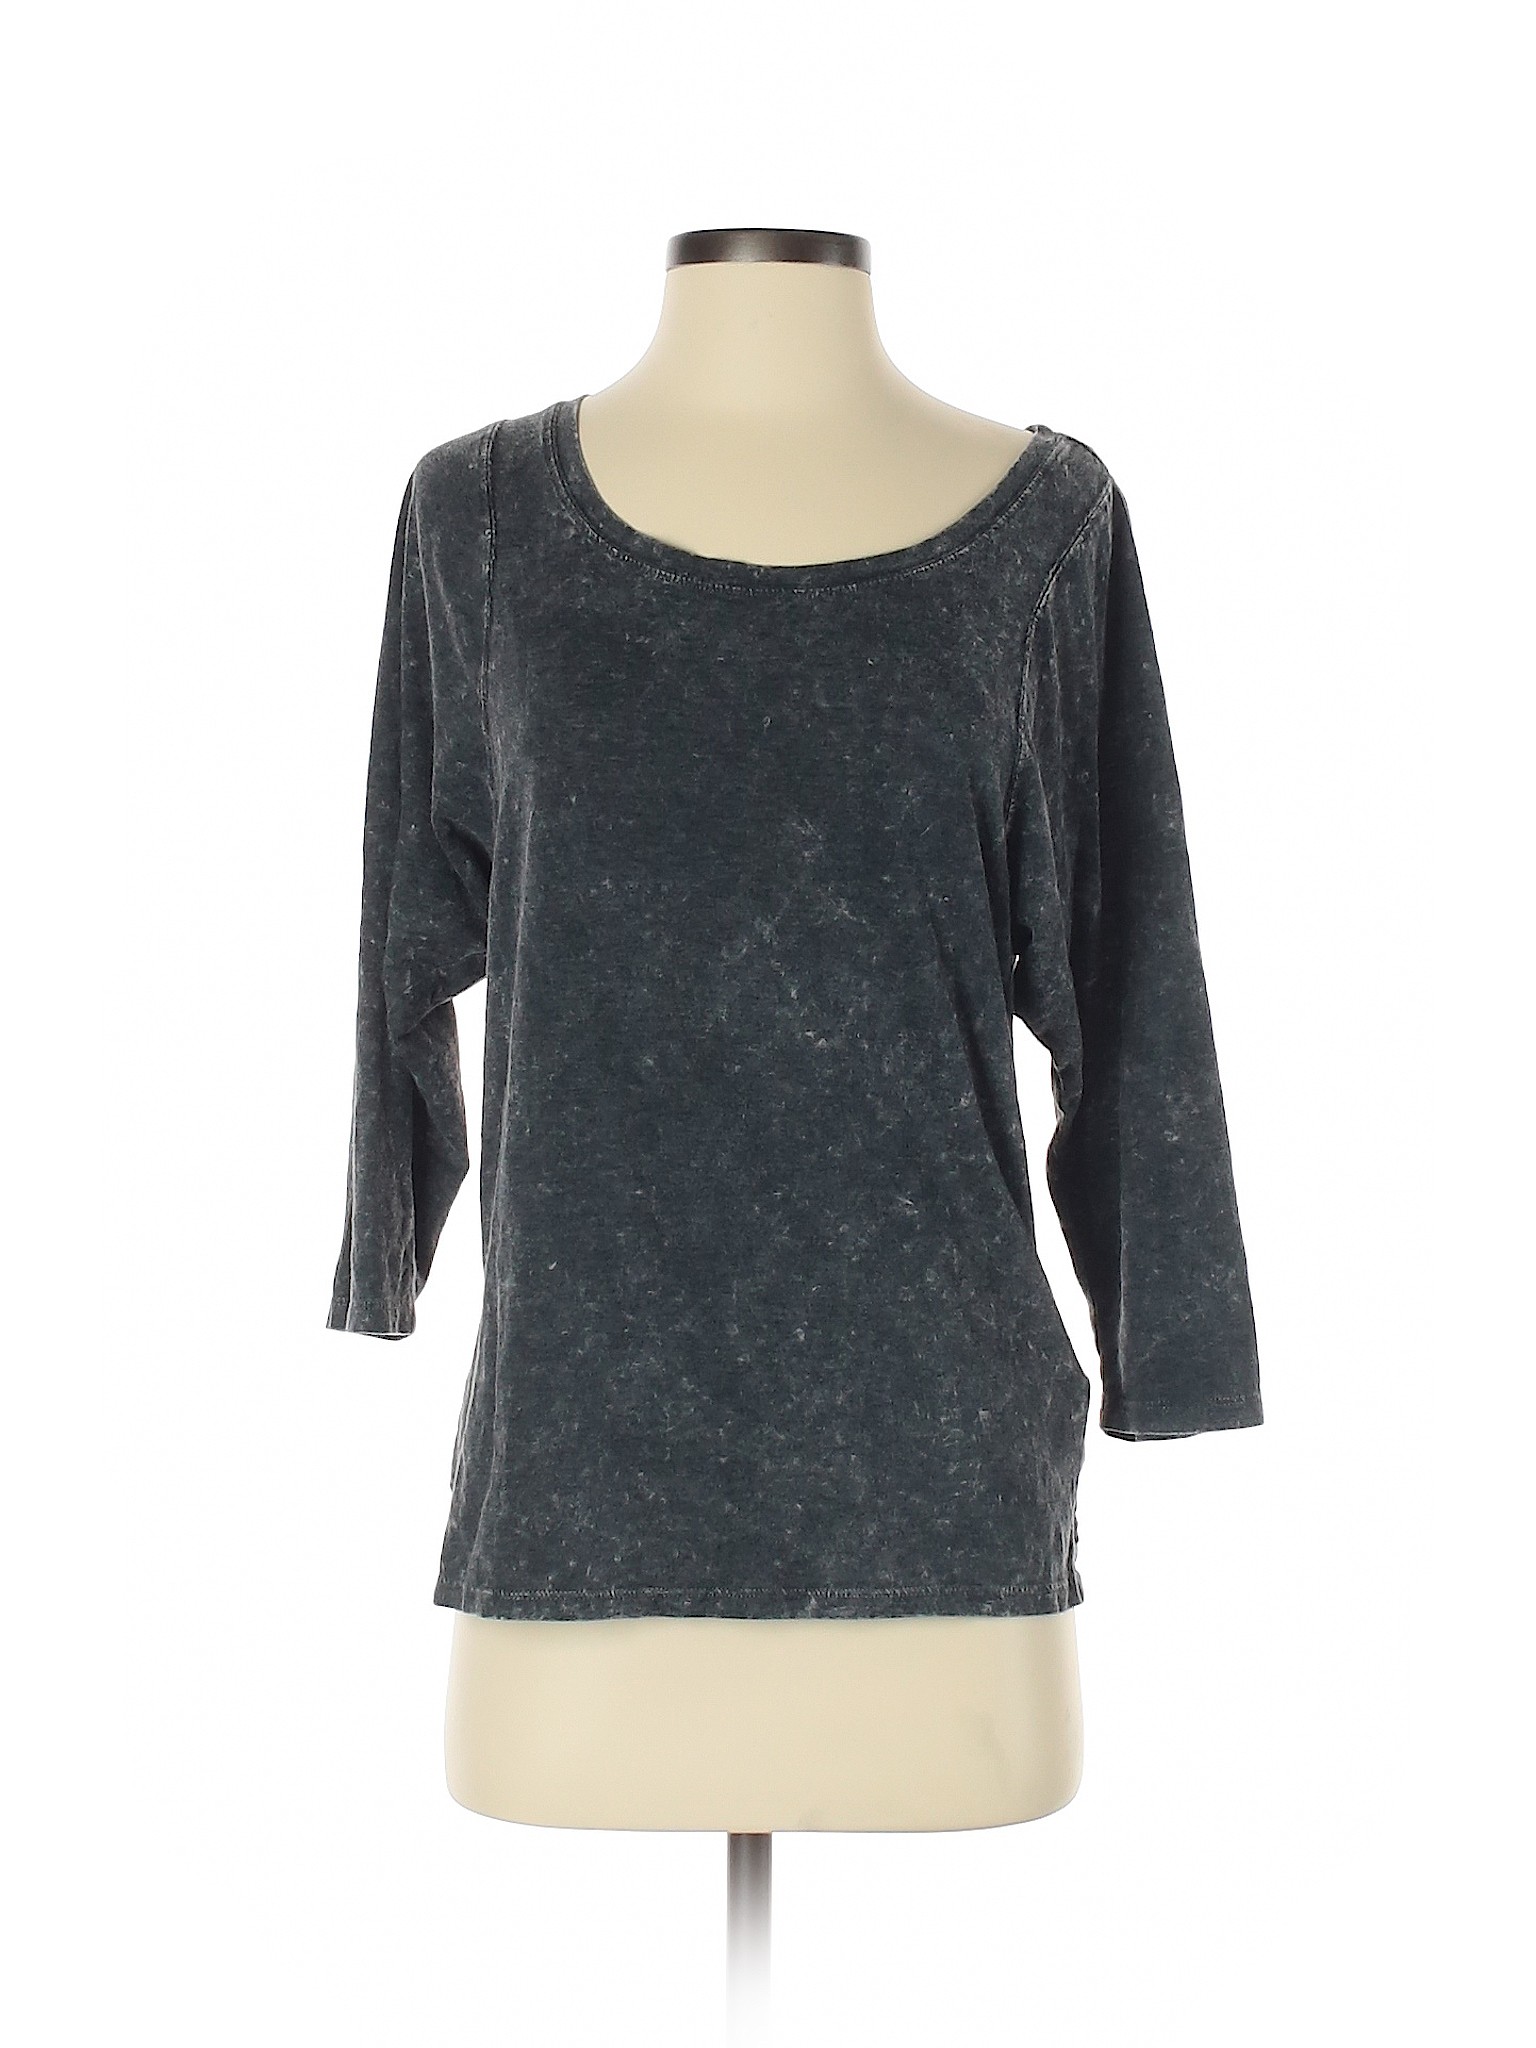 Cynthia Rowley TJX Women Green 3/4 Sleeve T-Shirt M | eBay